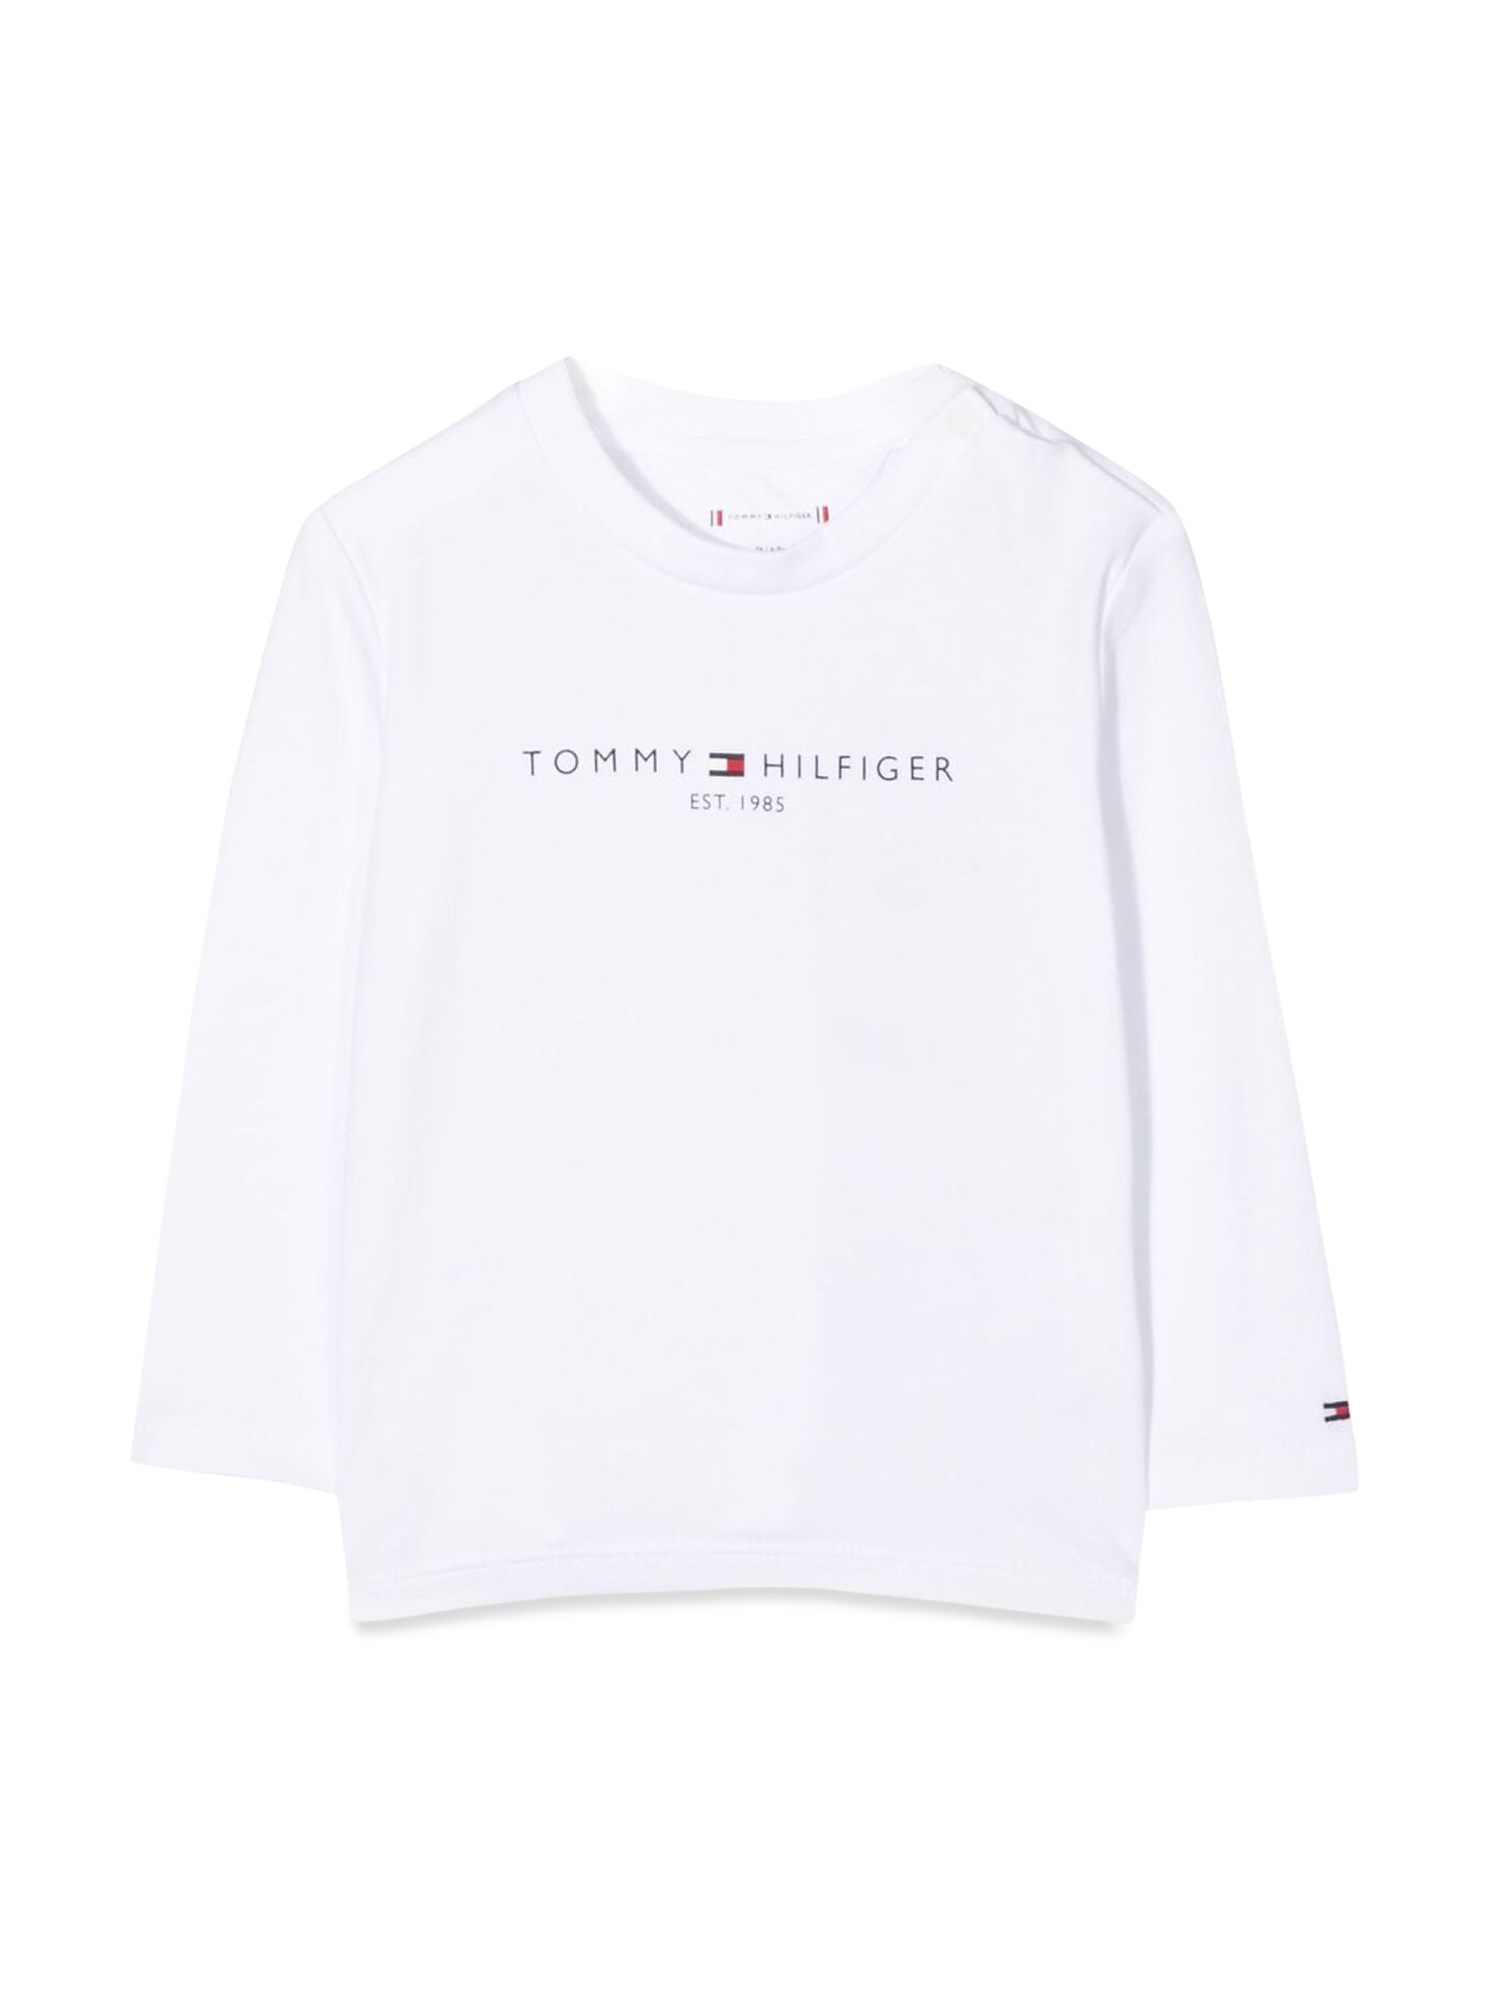 Tommy Hilfiger tommy hilfiger t-shirt m/l essential